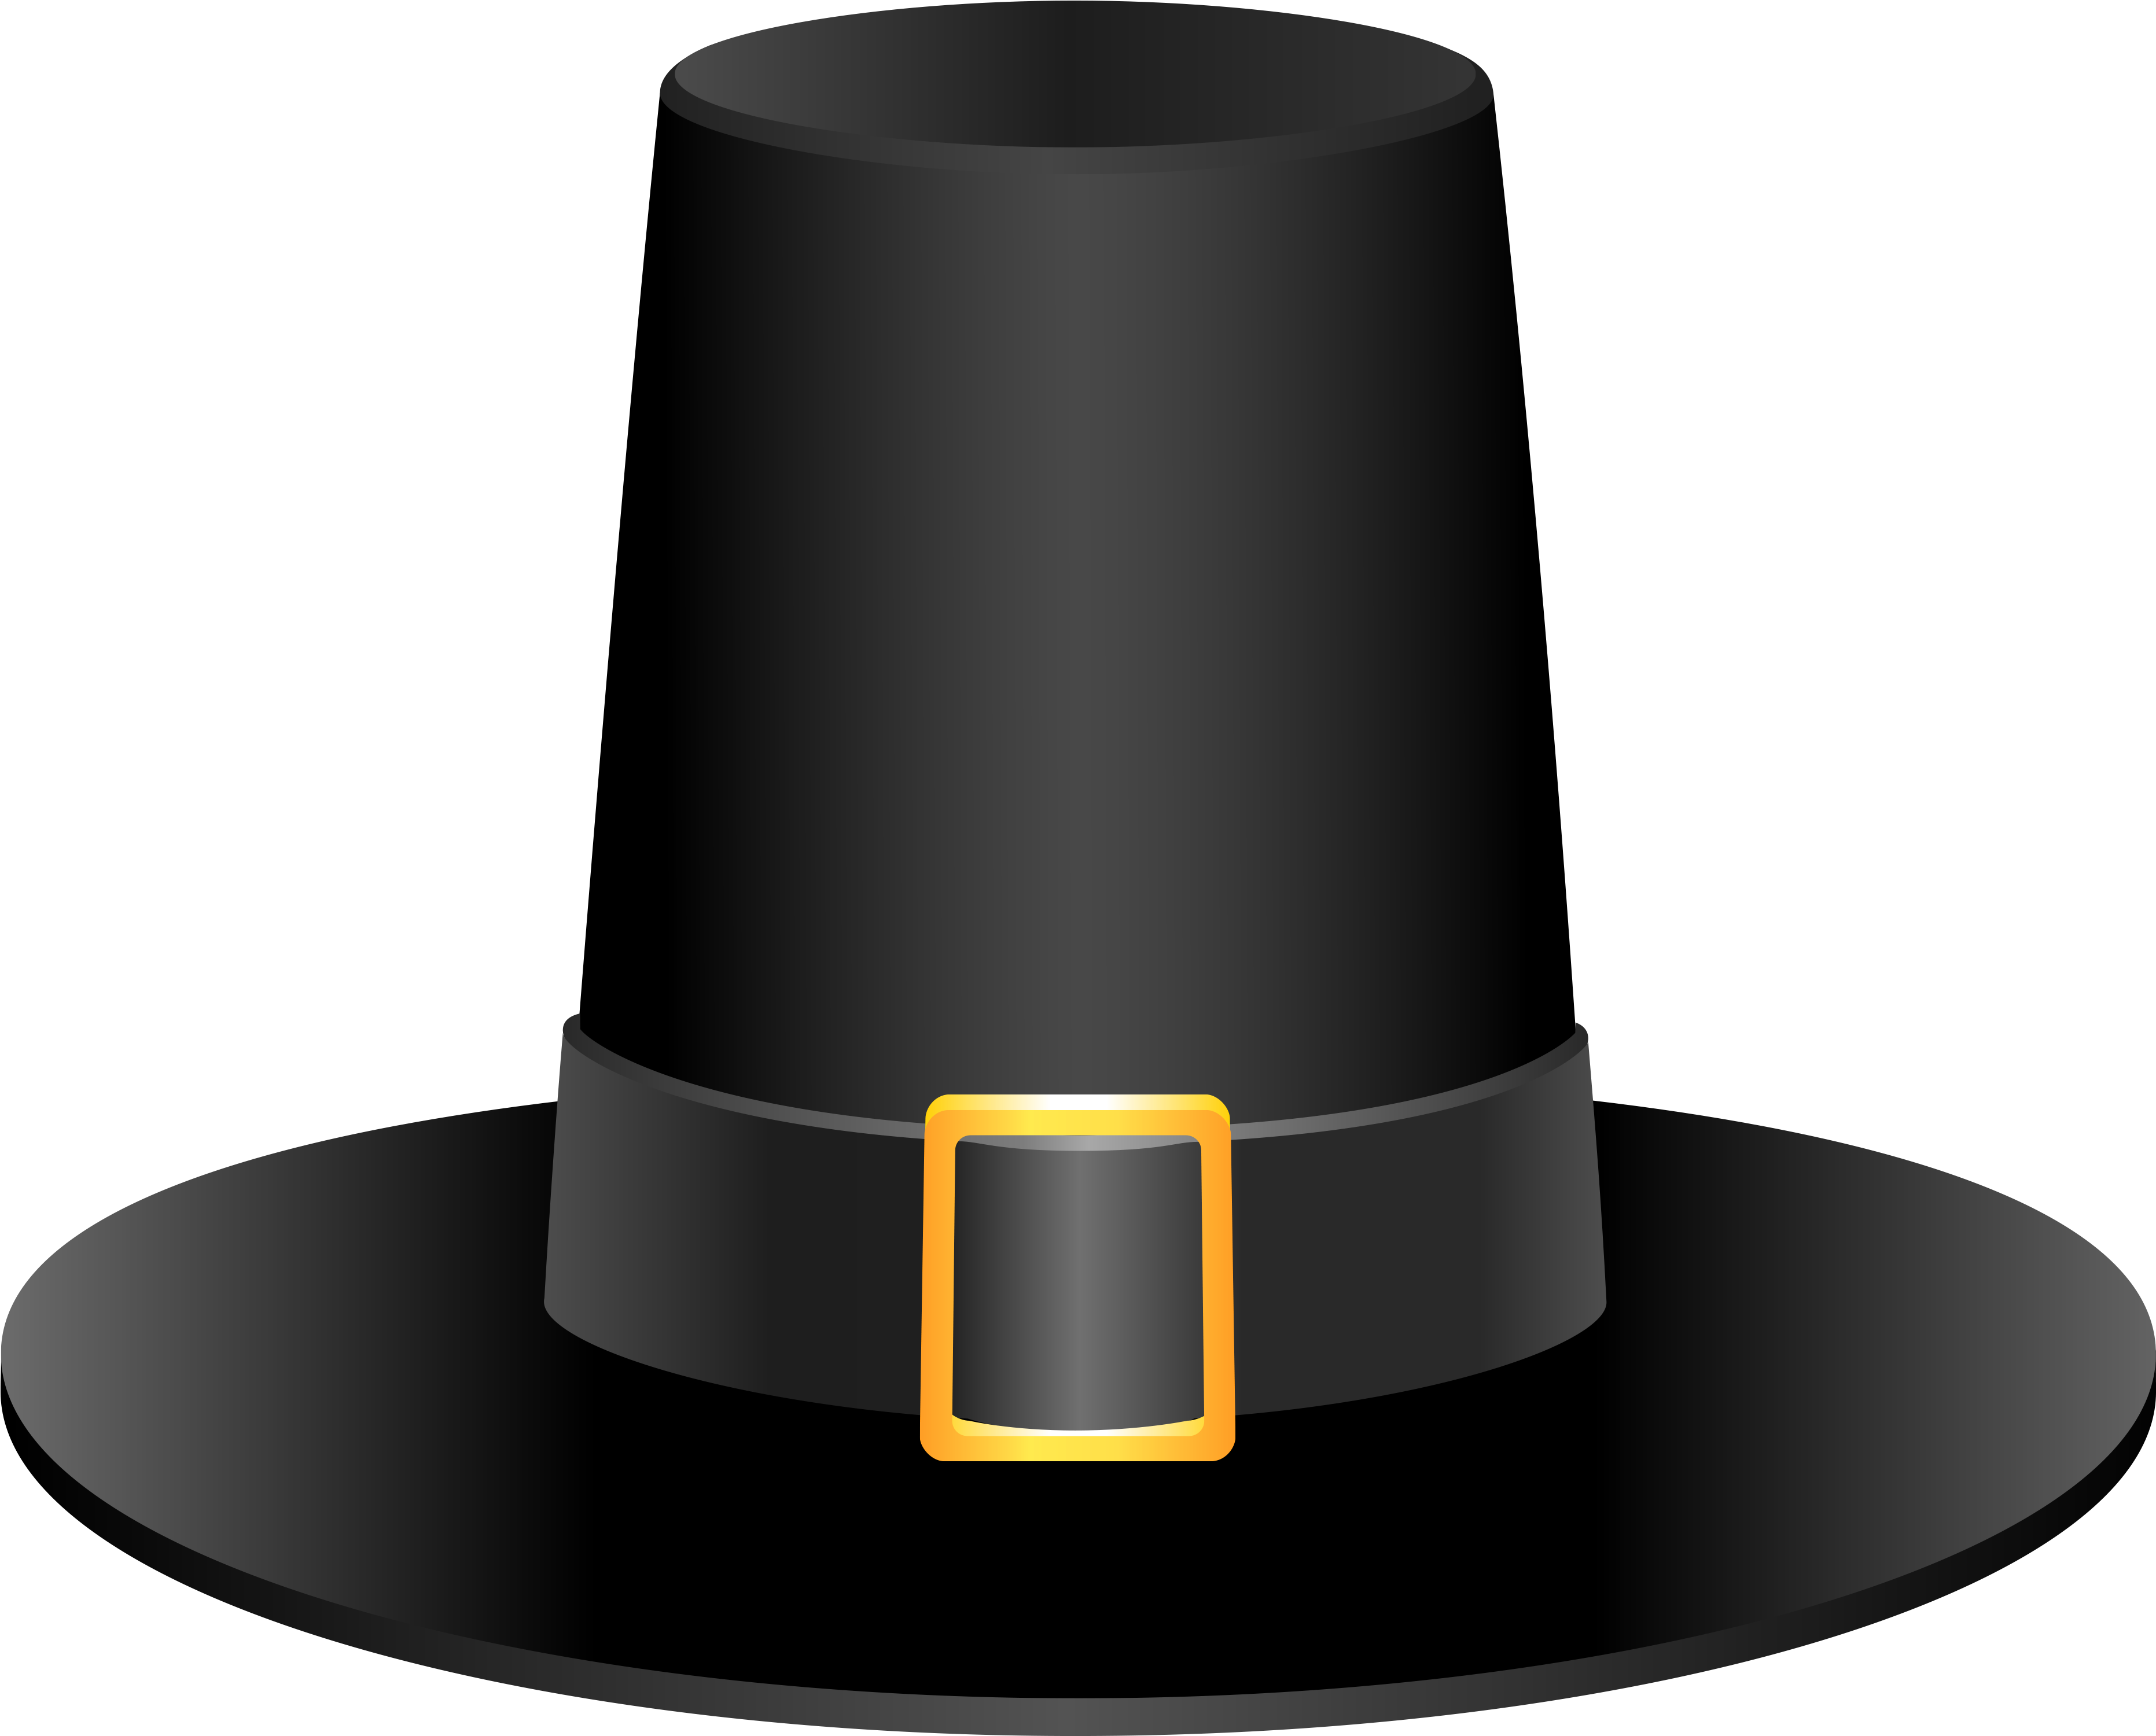 Black Pilgrim Hat Picture - Pilgrim Hat Clip Art .png (4018x3226), Png Download